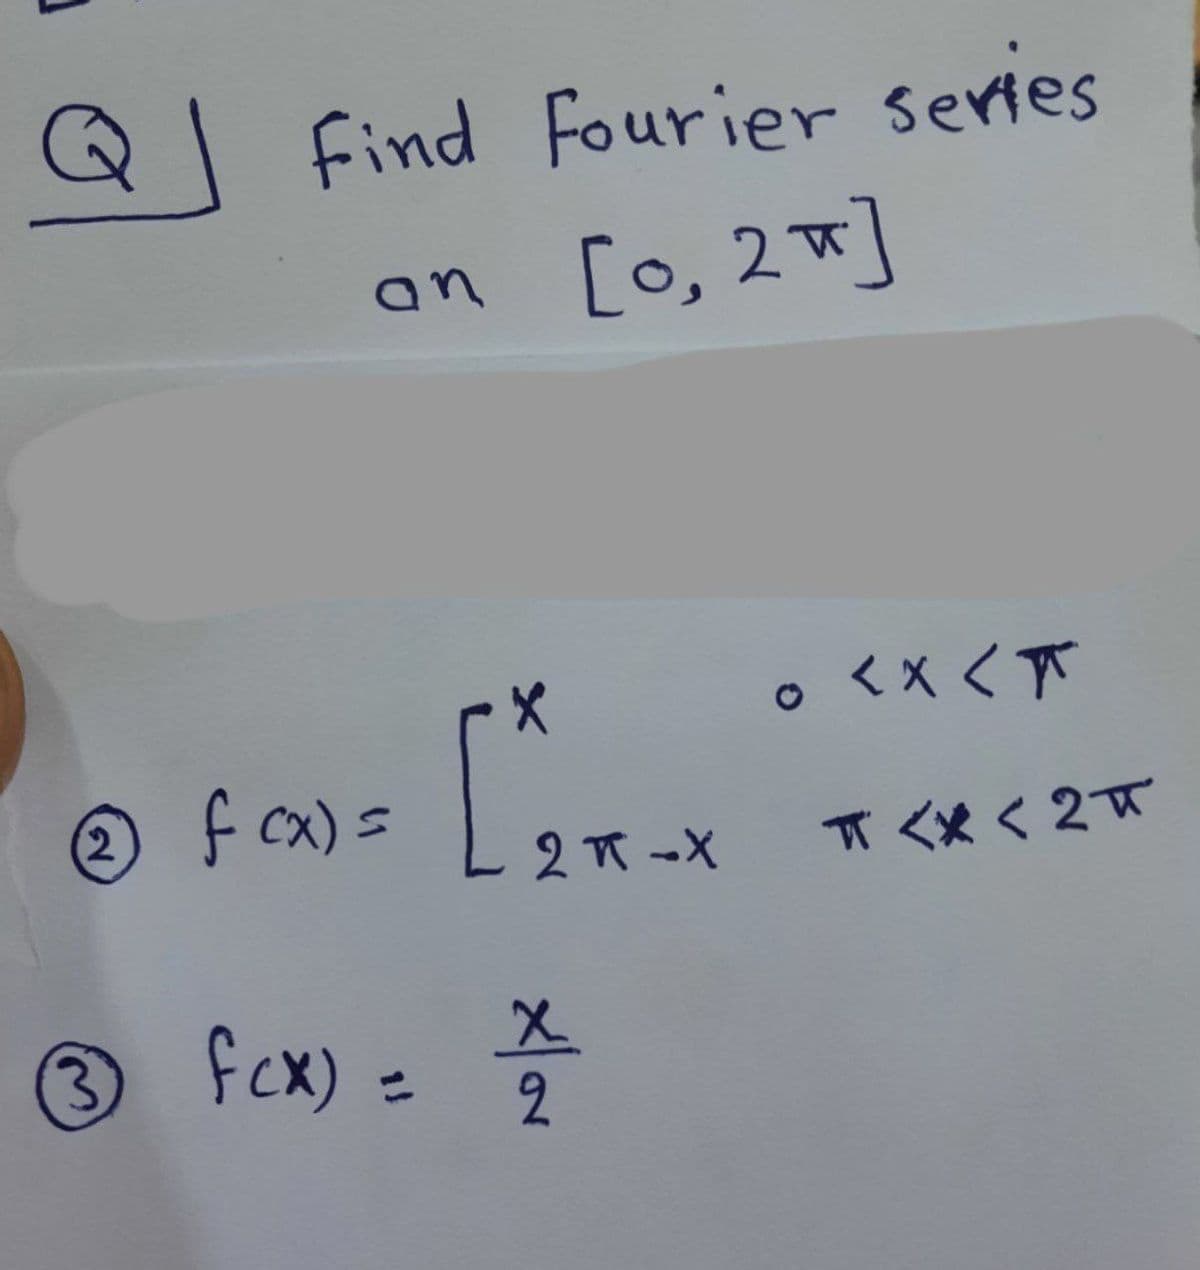 Q Find Fourier series
an [o, 2w]
くxく下
o
f cx)=
_2π-X
πくx< 2π
3 fcx):
